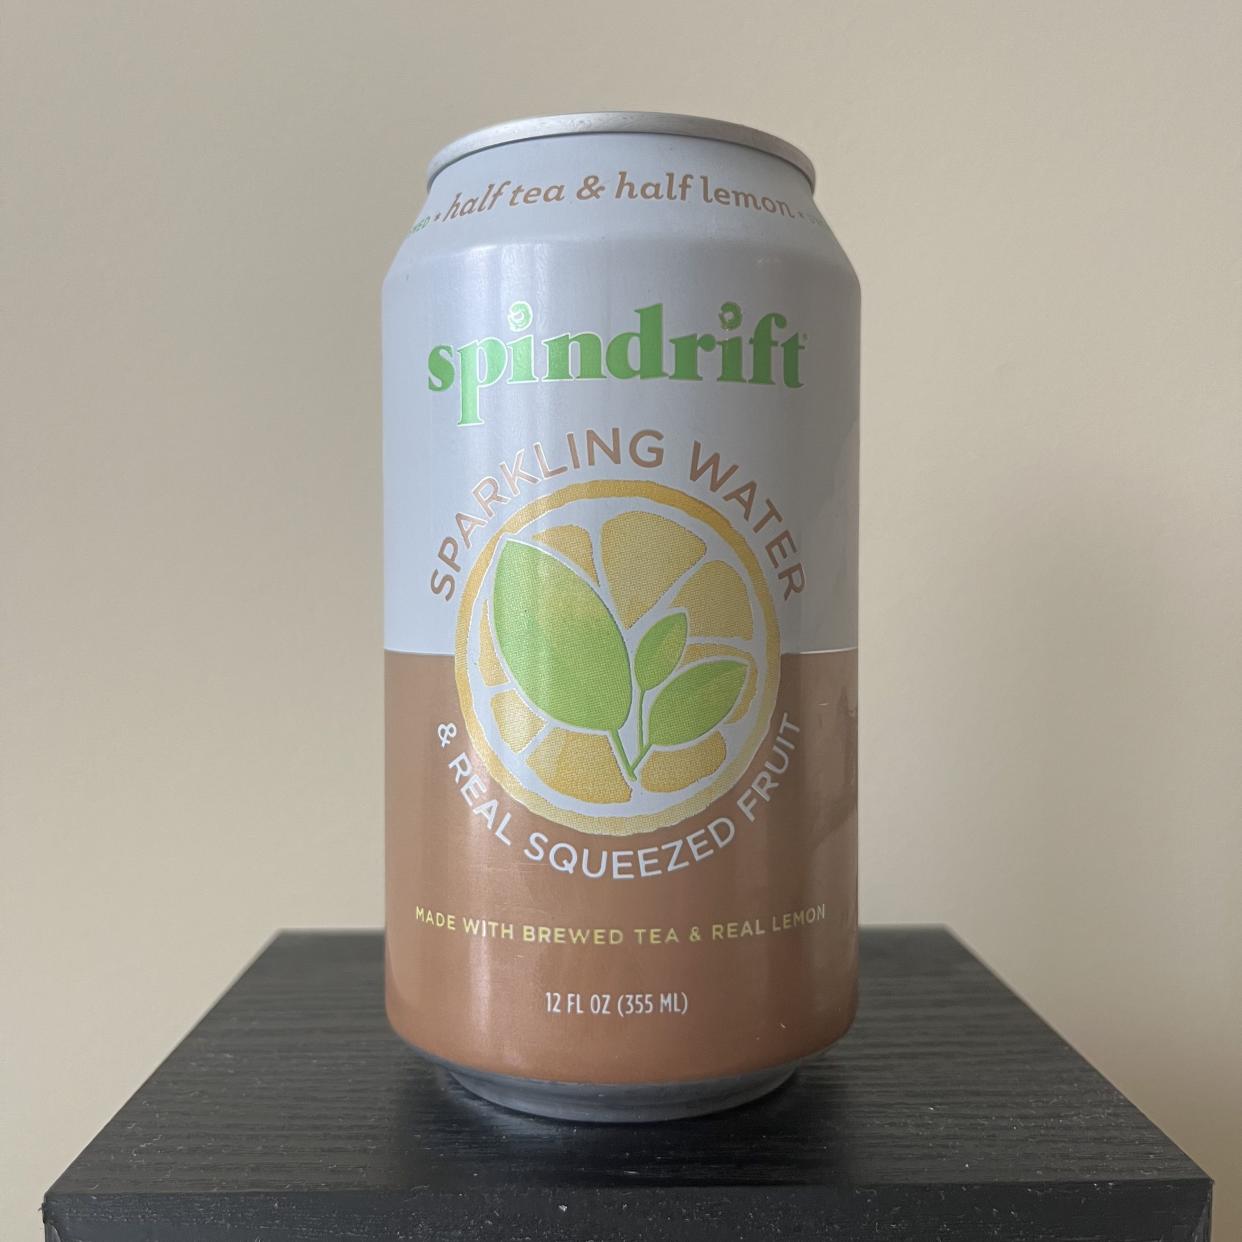 a can of spindrift half tea half lemon arnold palmer